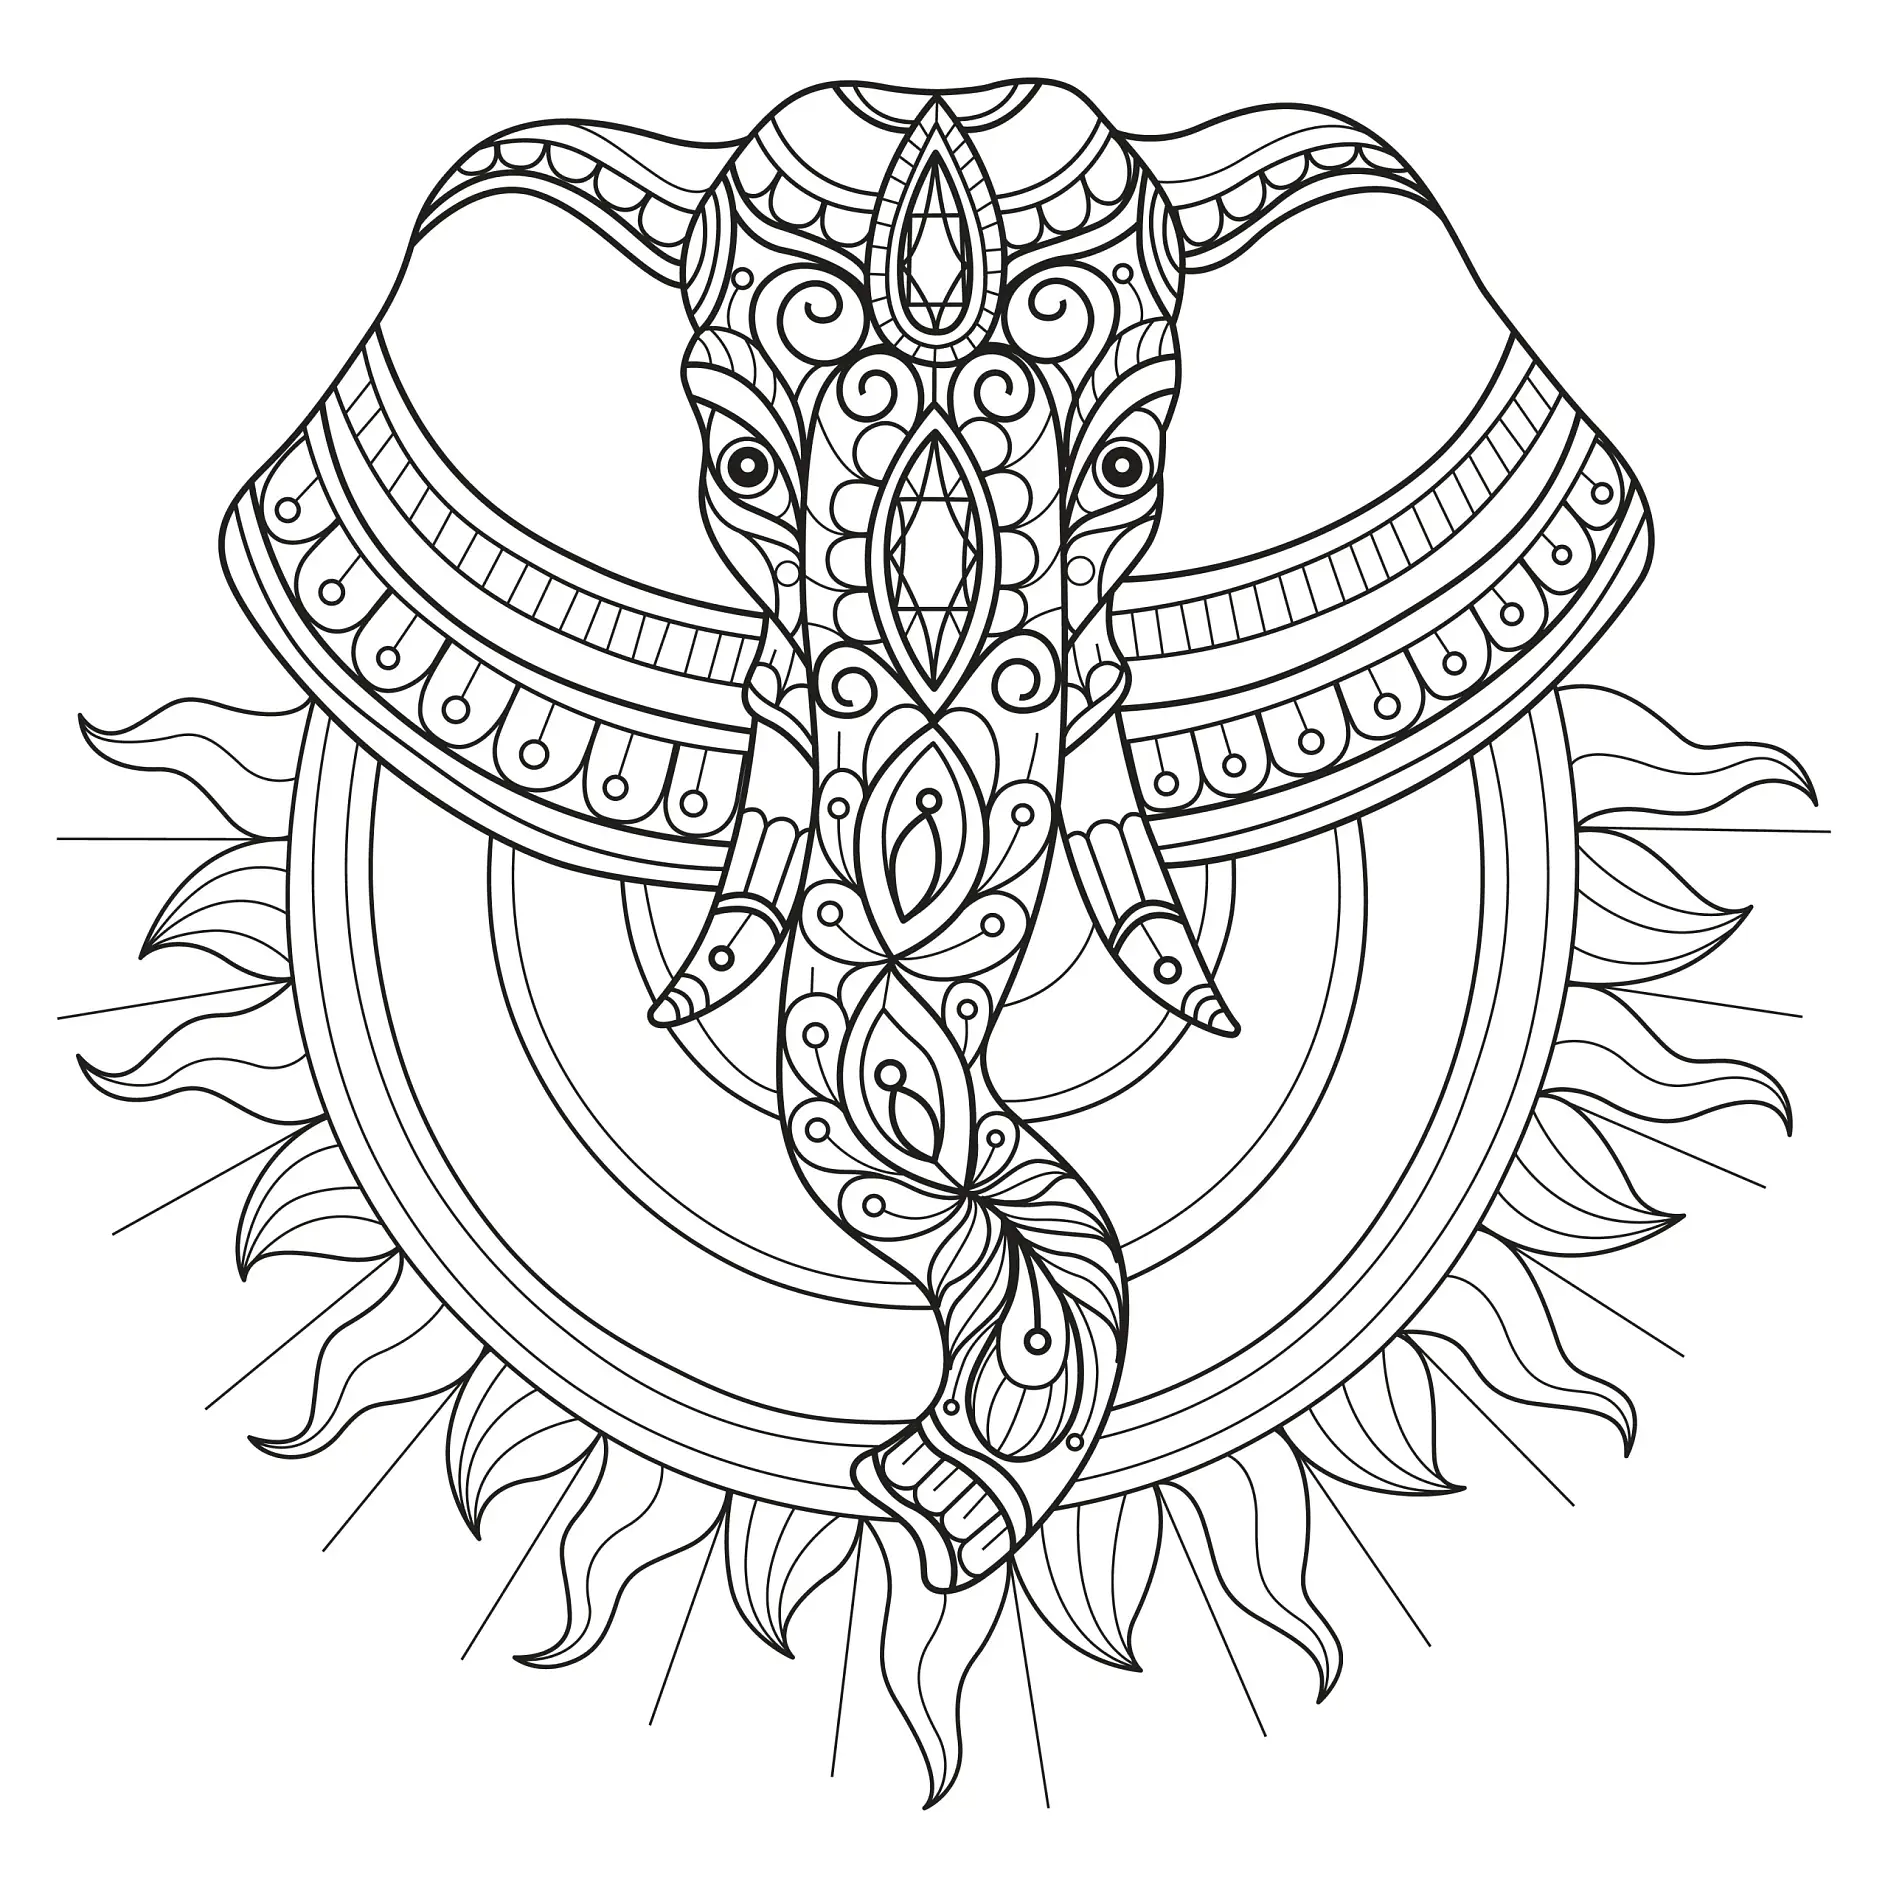 Ausmalbild Mandala Elefant mit Ornamenten und Sonnenmuster